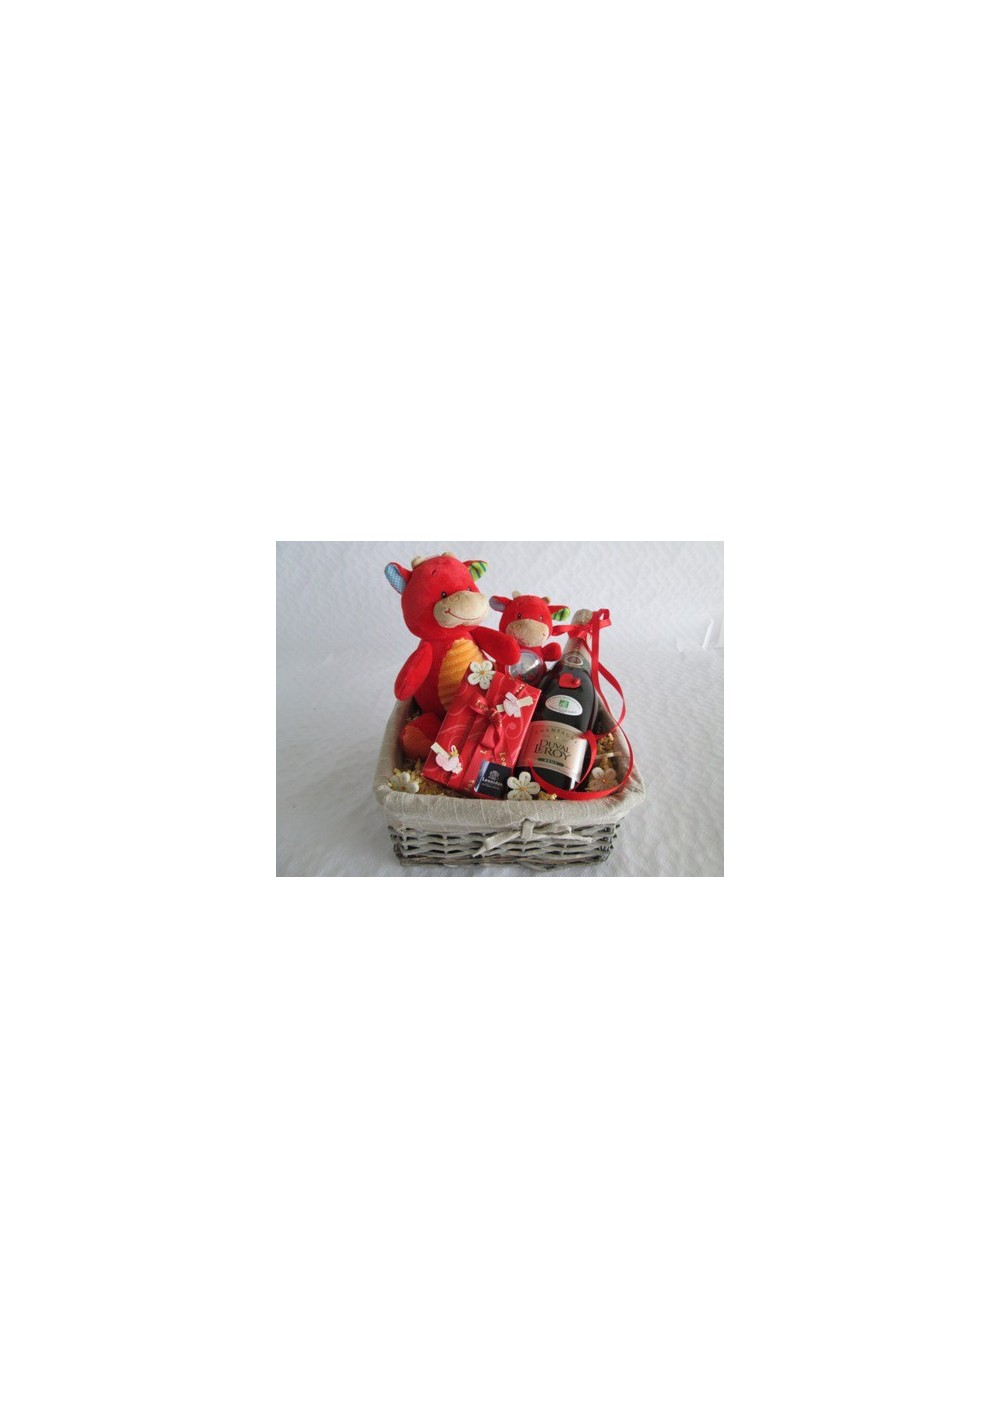 Belgium birth gift basket